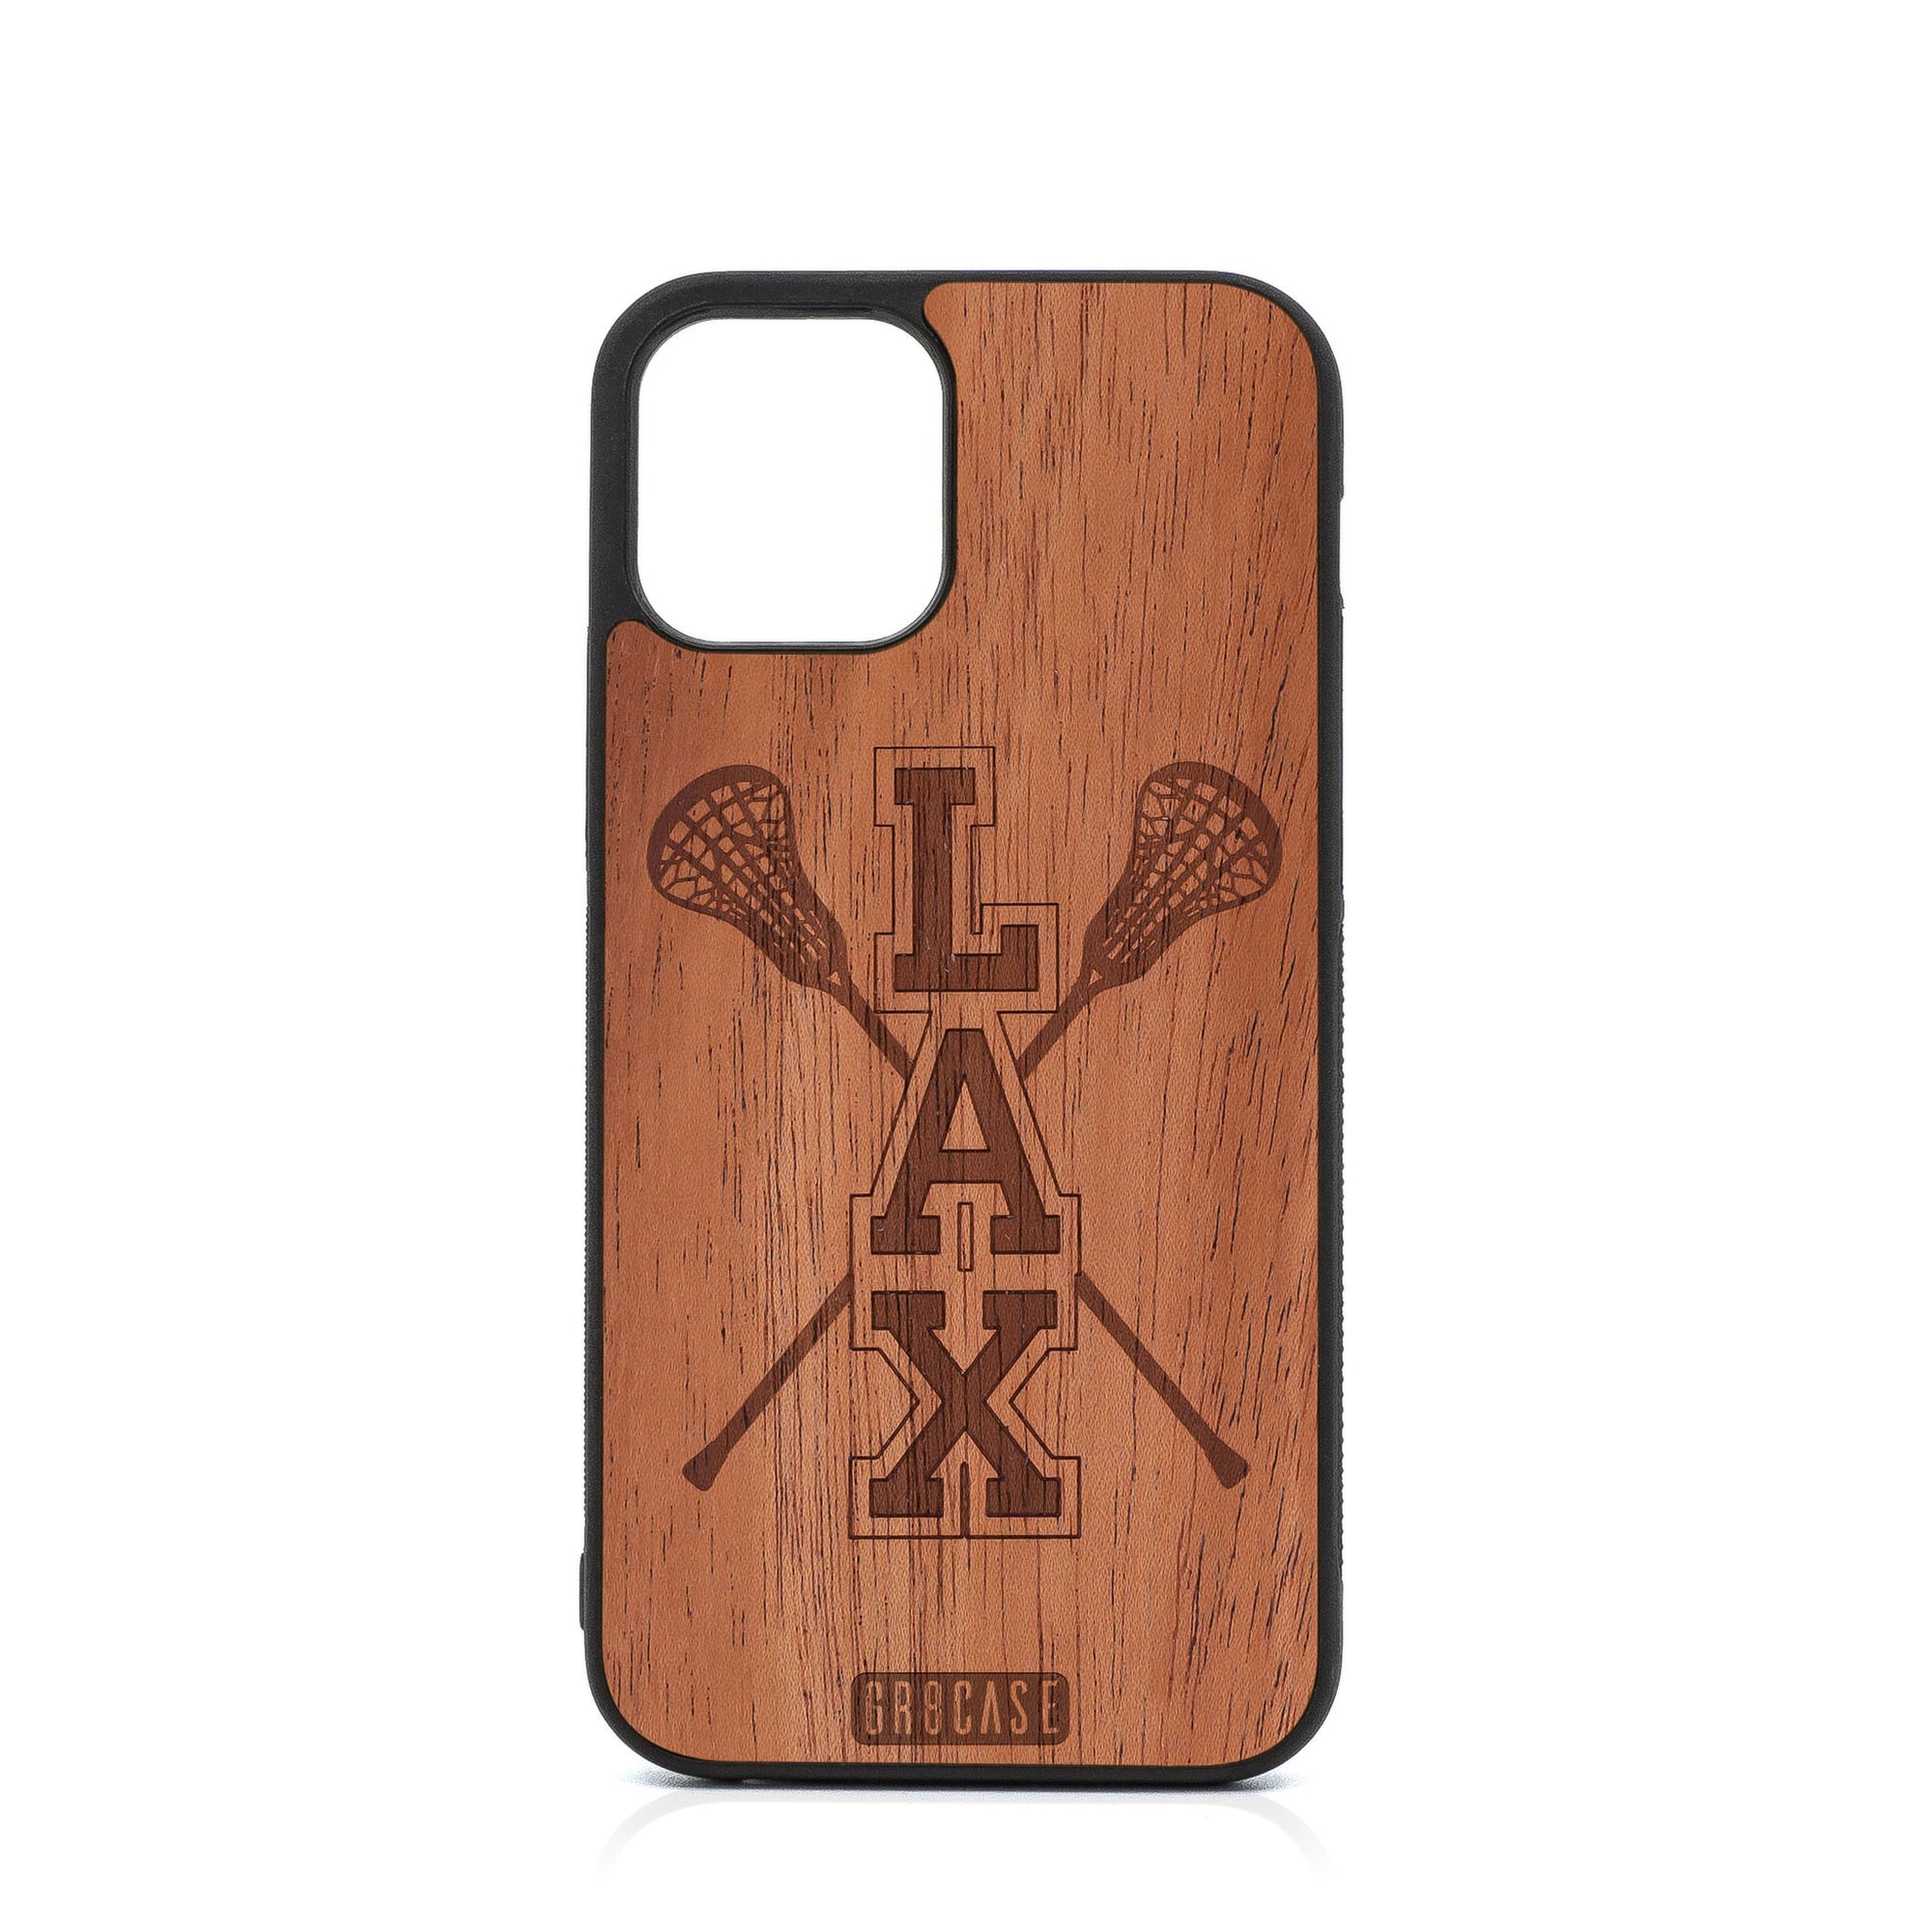 Lacrosse (LAX) Sticks Design Wood Case For iPhone 12 Pro